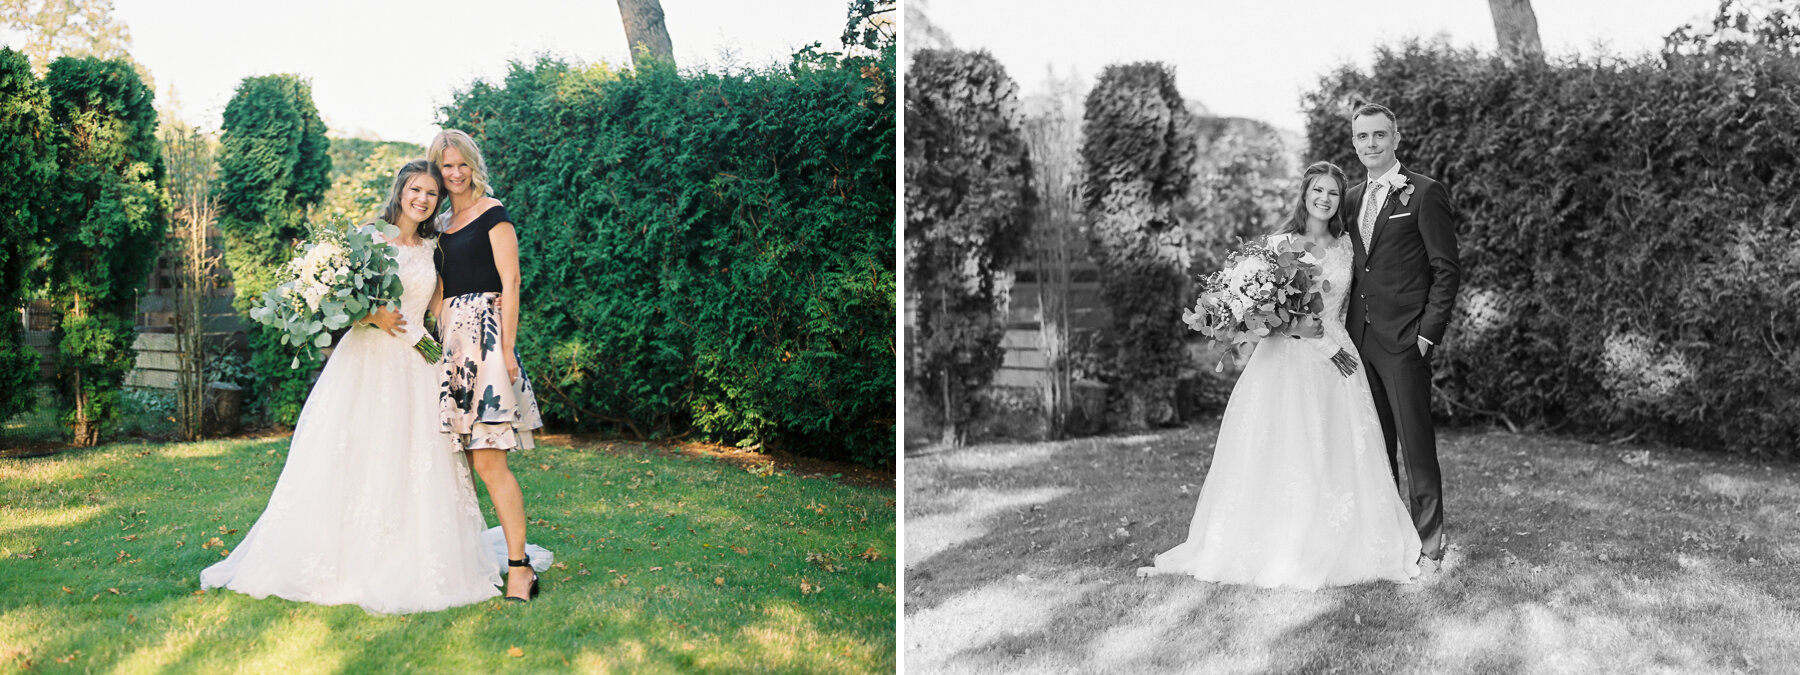 1 Oak Bay Intimate Backyard Wedding Photography 67.JPG